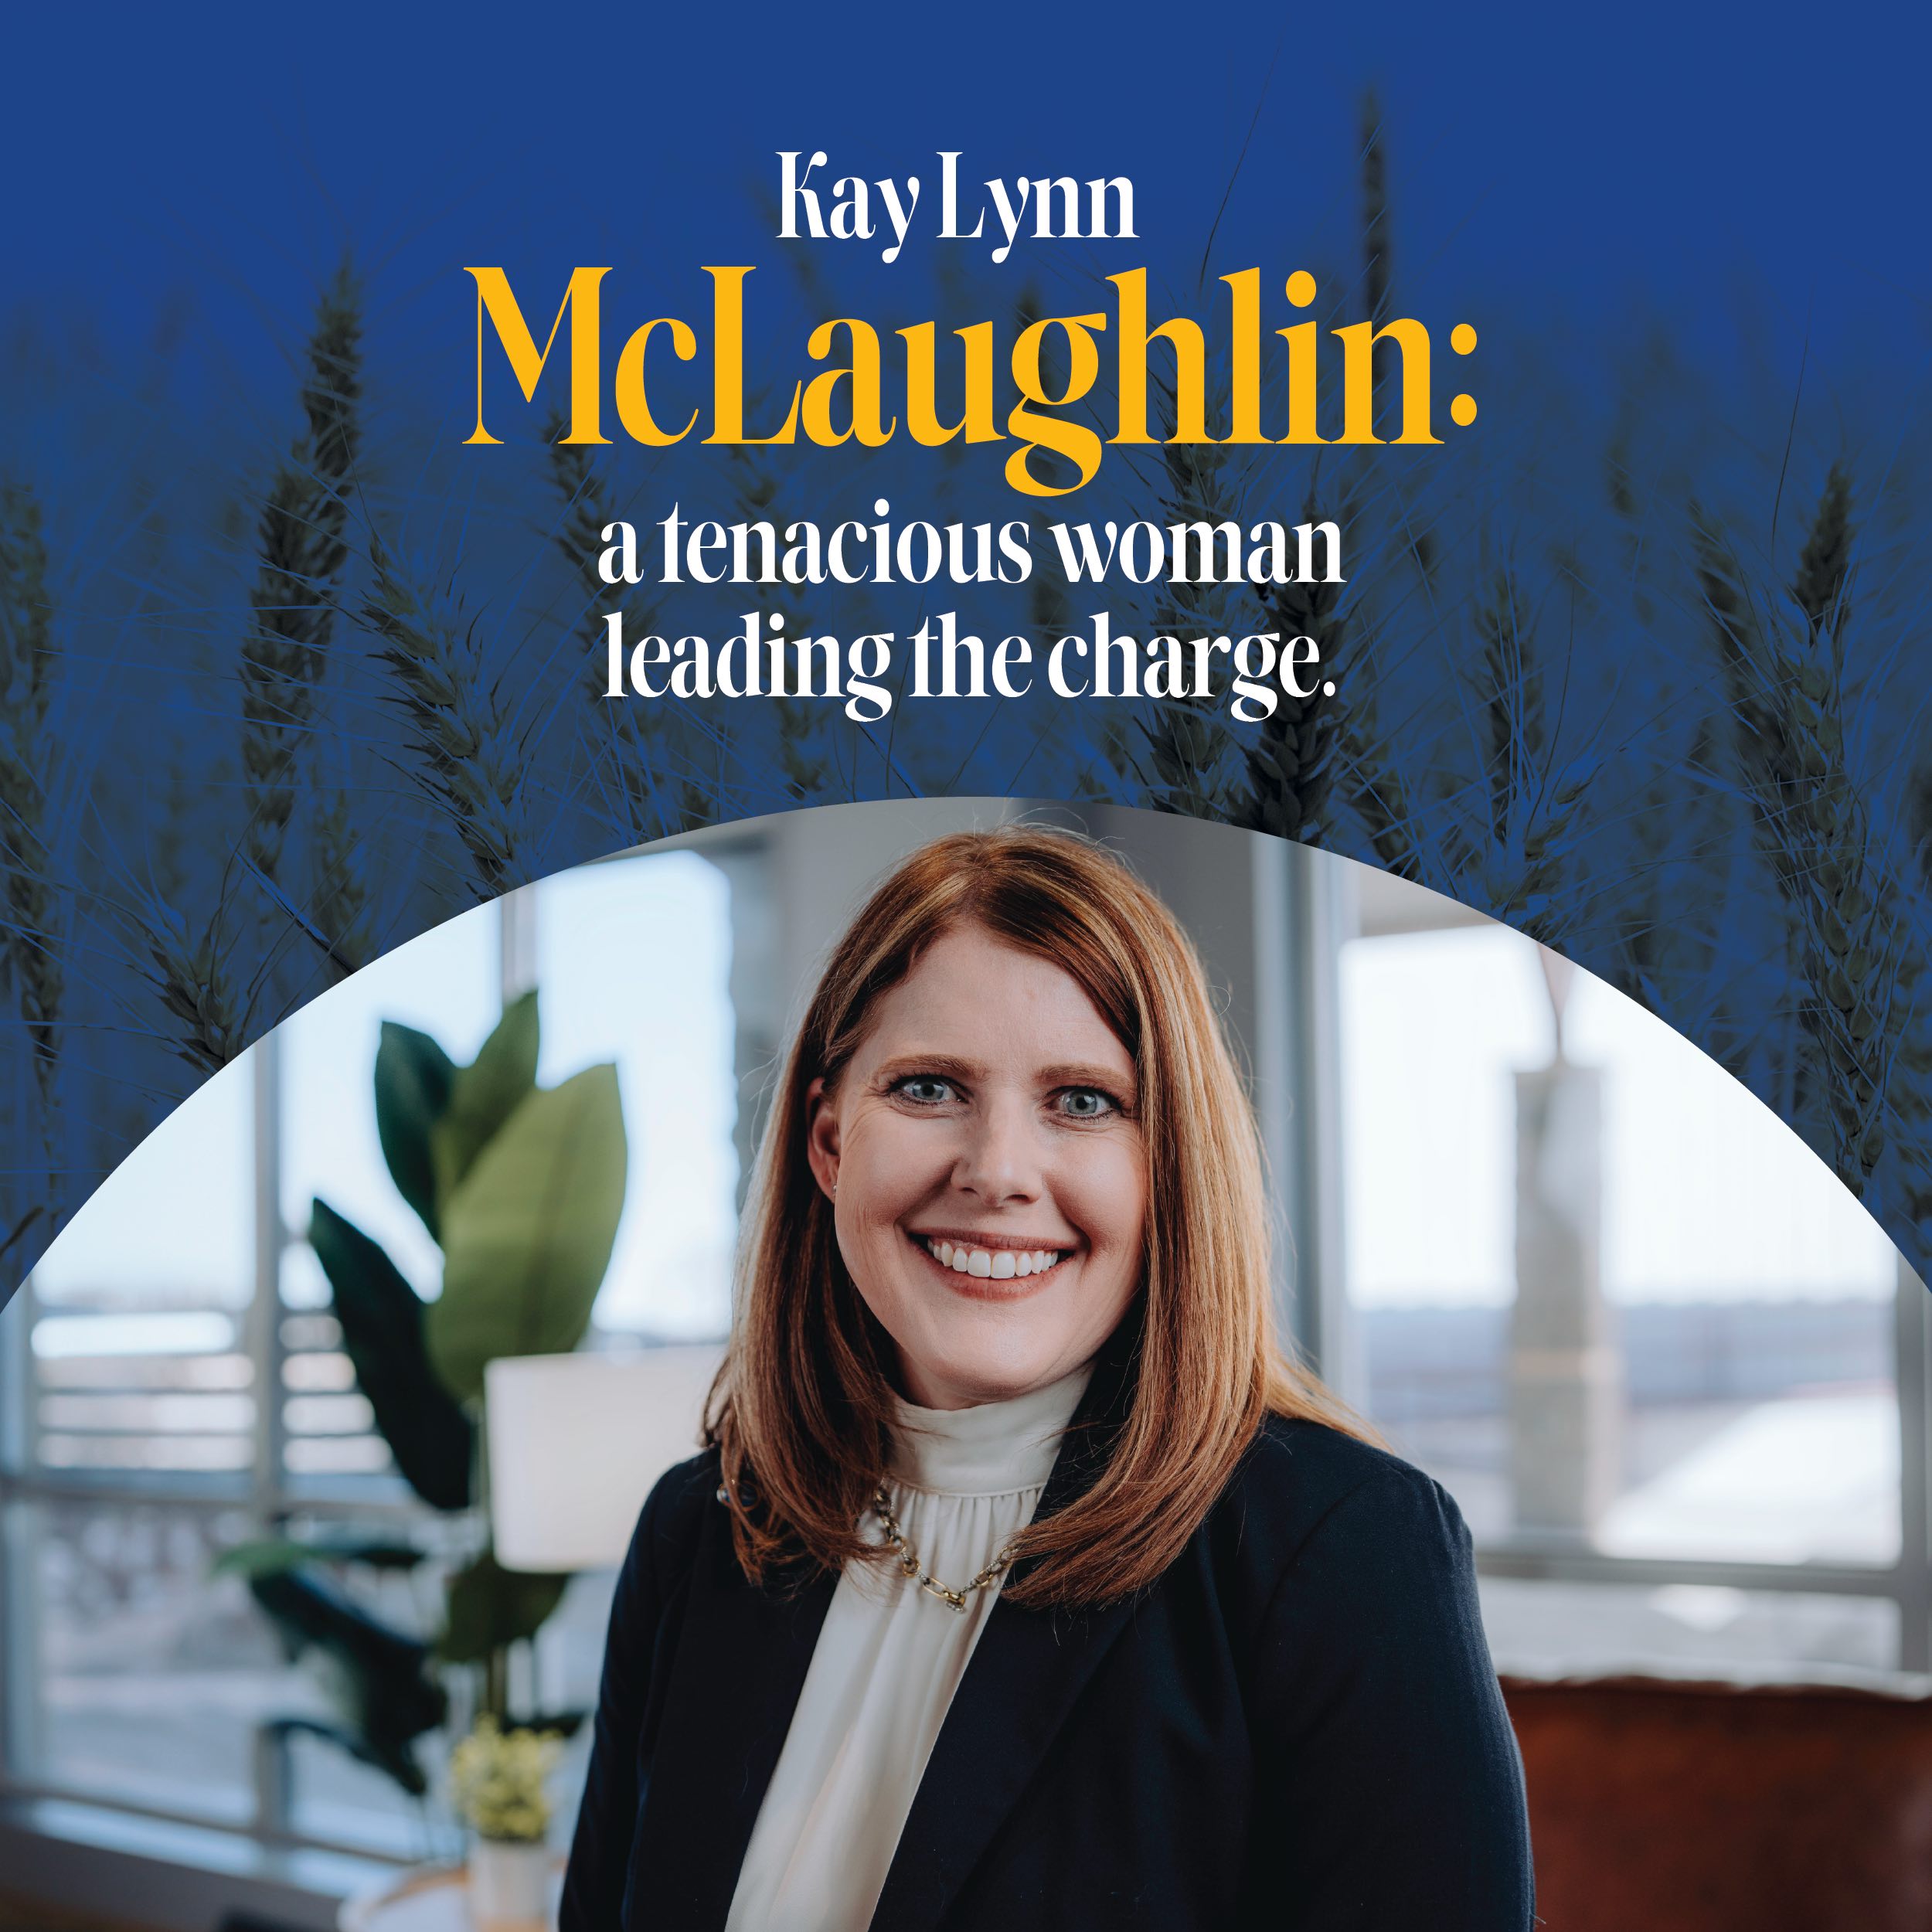 Kay Lynn McLaughlin: A Tenacious Woman Leading the Charge